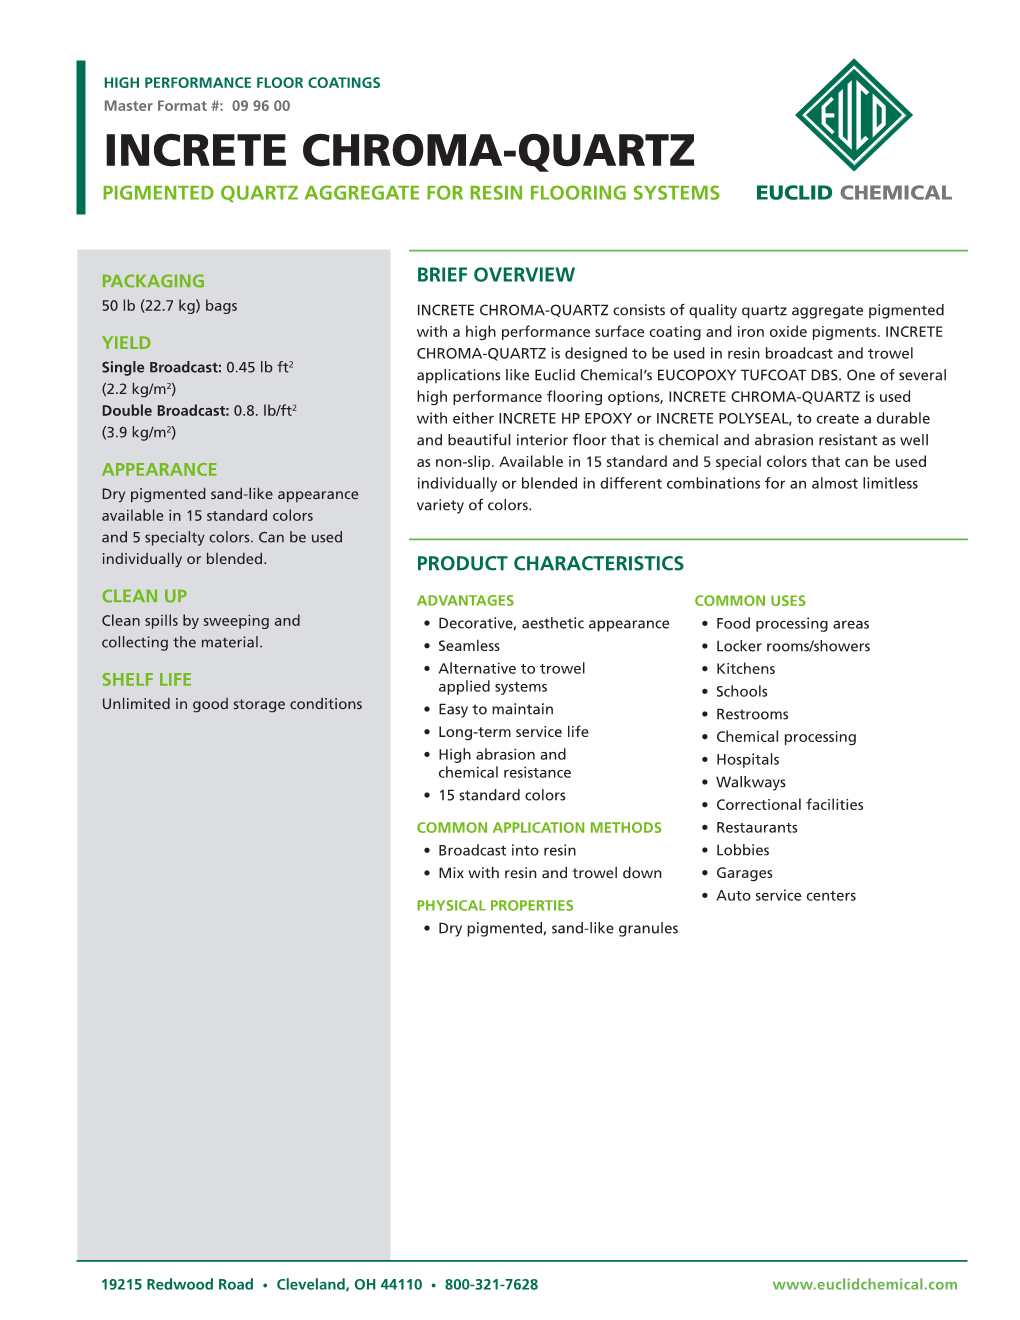 Increte Chroma-Quartz Pigmented Quartz Aggregate for Resin Flooring Systems